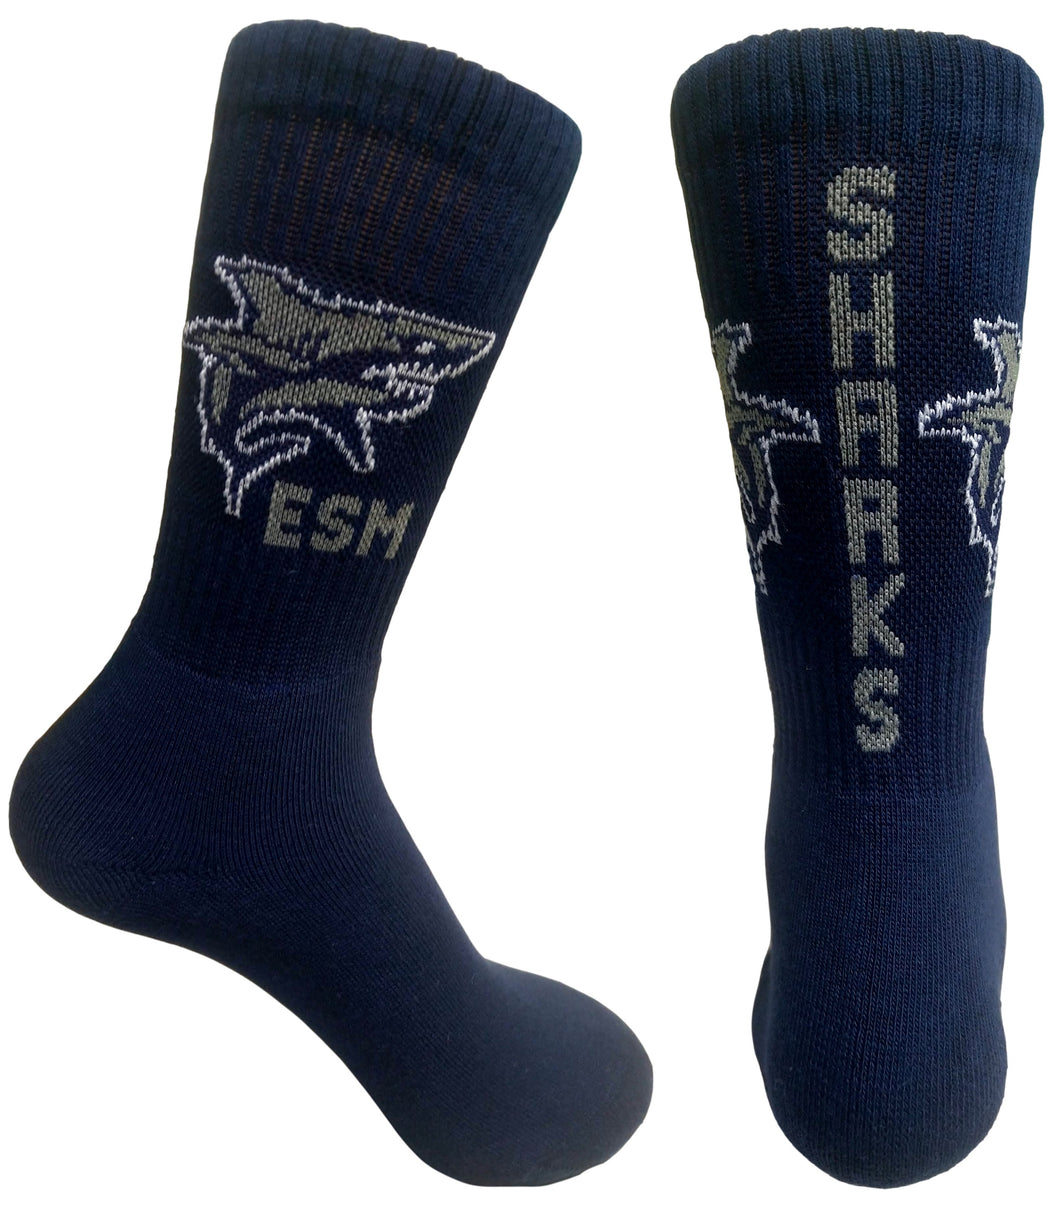 ESM Sharks Socks